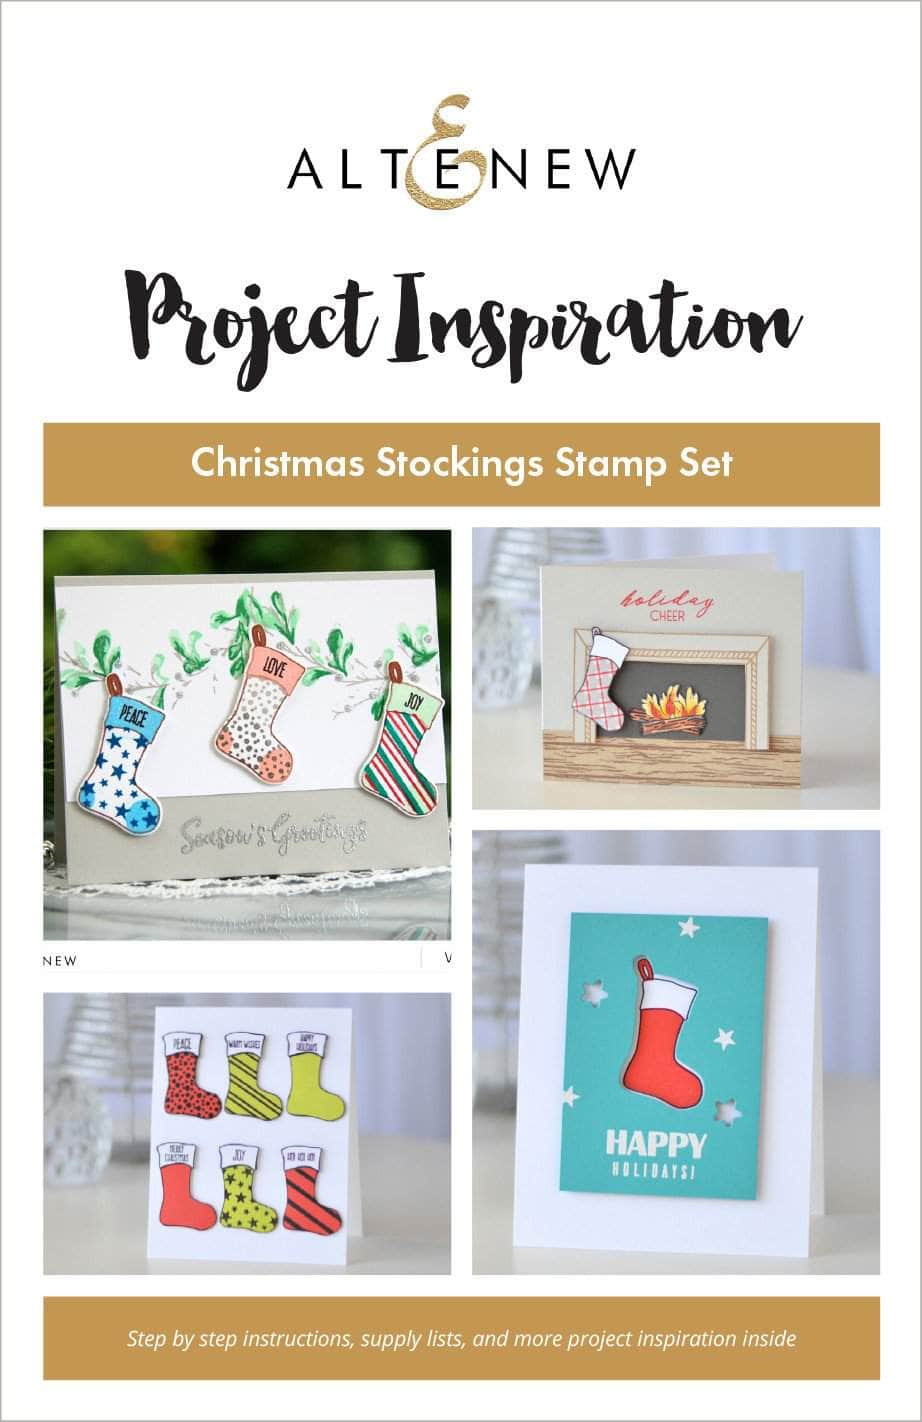 Printed Media Christmas Stockings Inspiration Guide